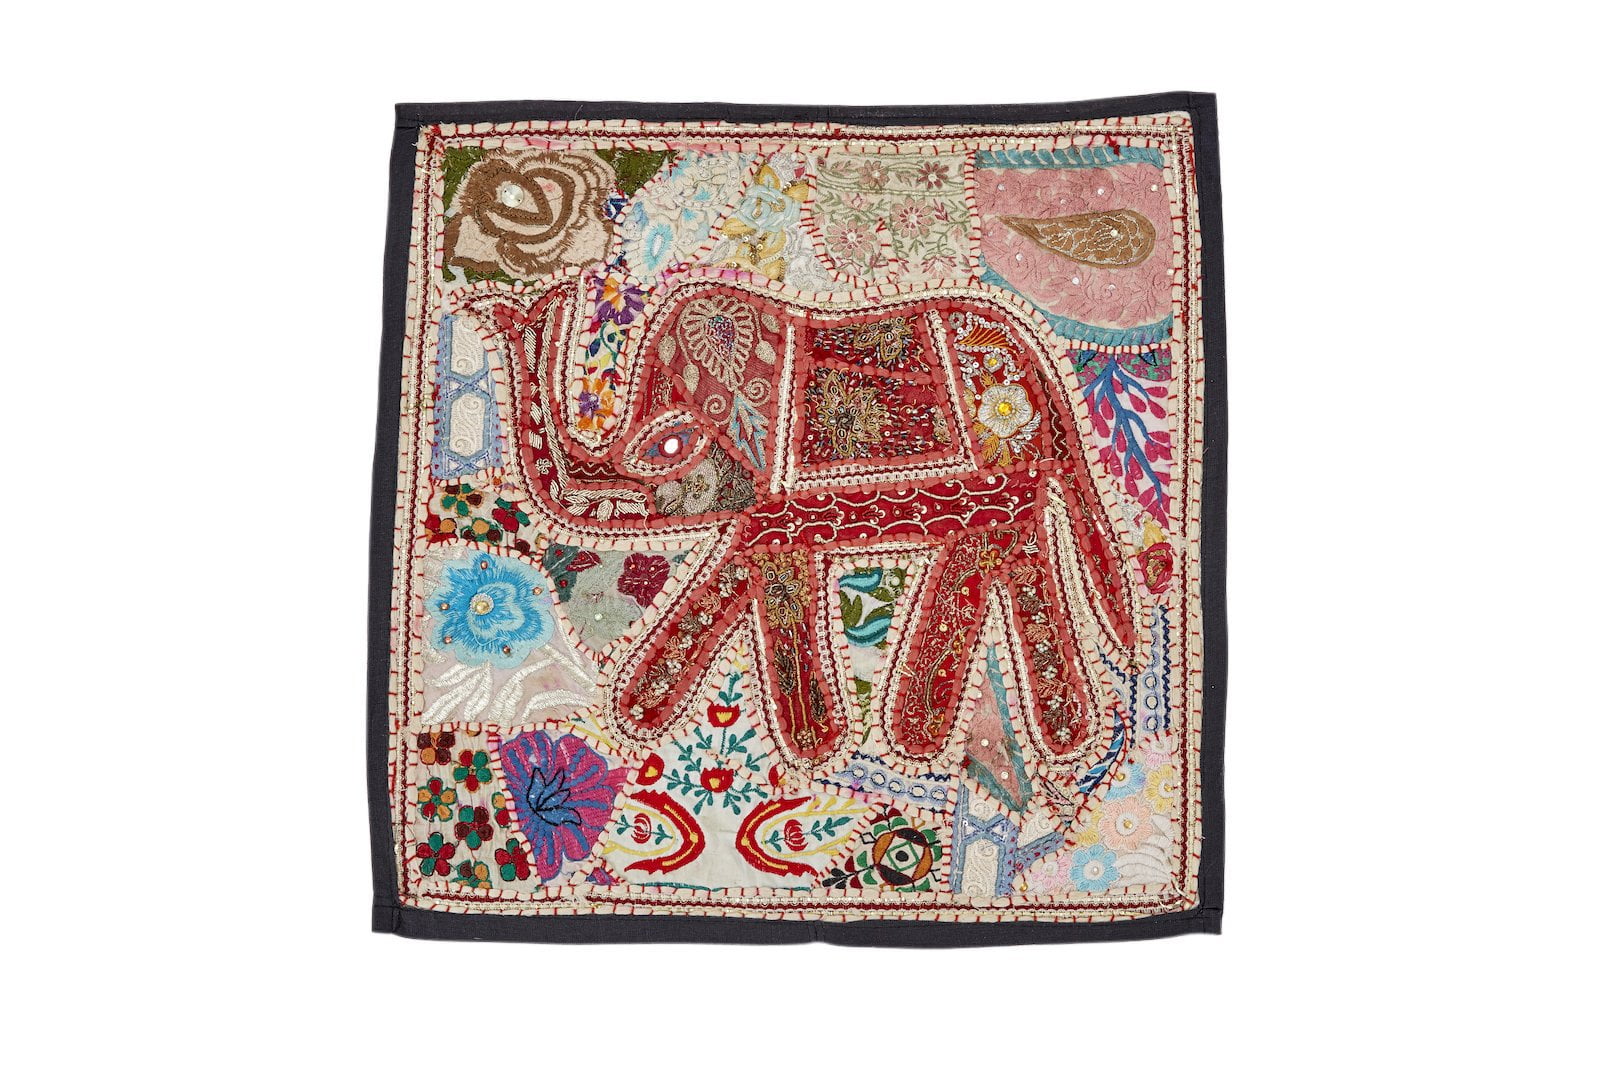 Indian Elephant Cushion Cover